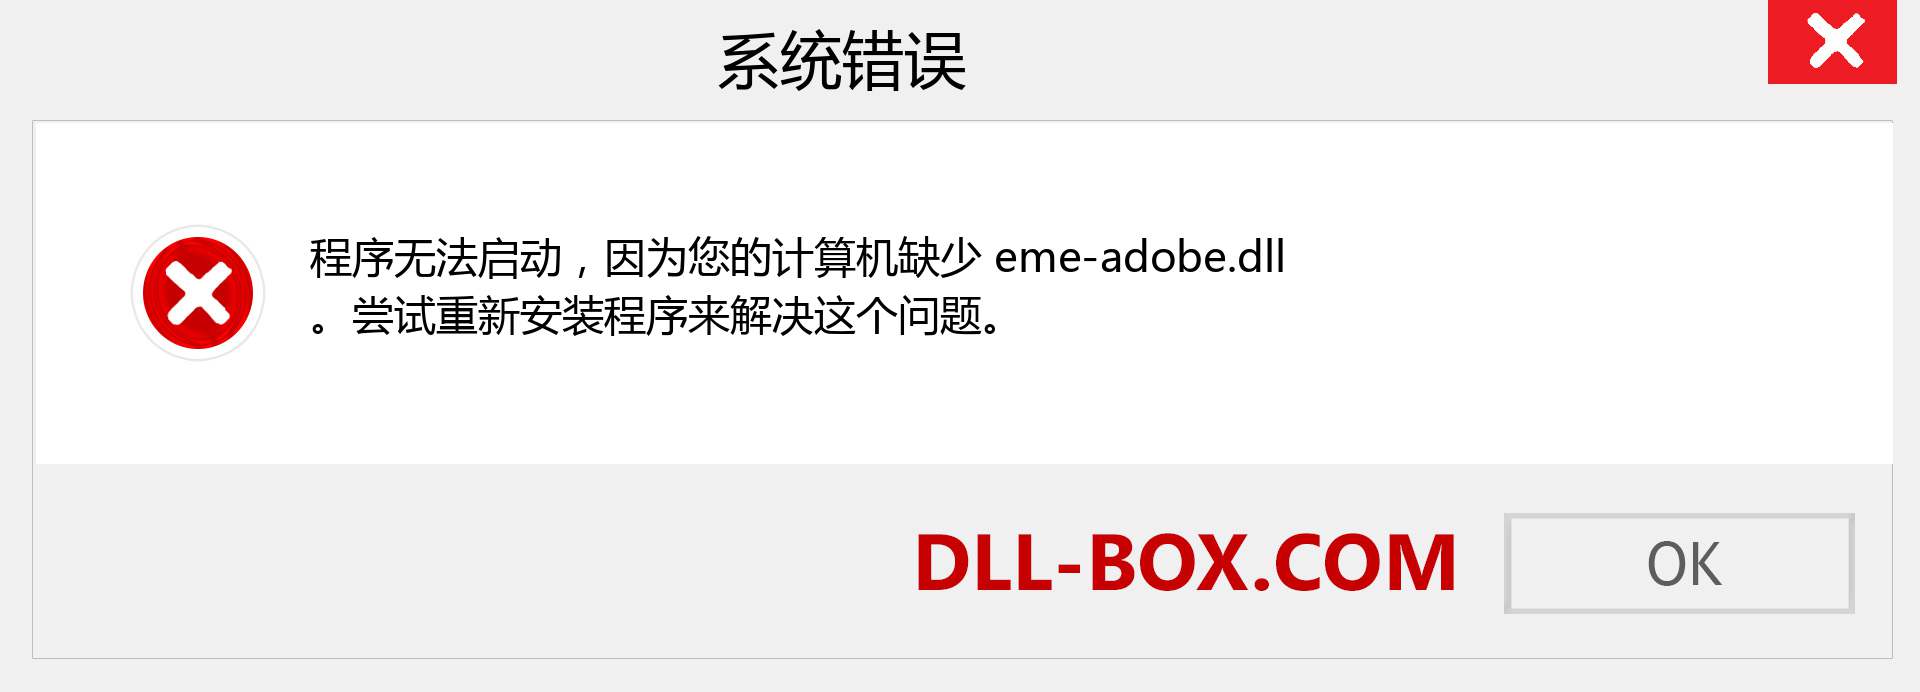 eme-adobe.dll 文件丢失？。 适用于 Windows 7、8、10 的下载 - 修复 Windows、照片、图像上的 eme-adobe dll 丢失错误